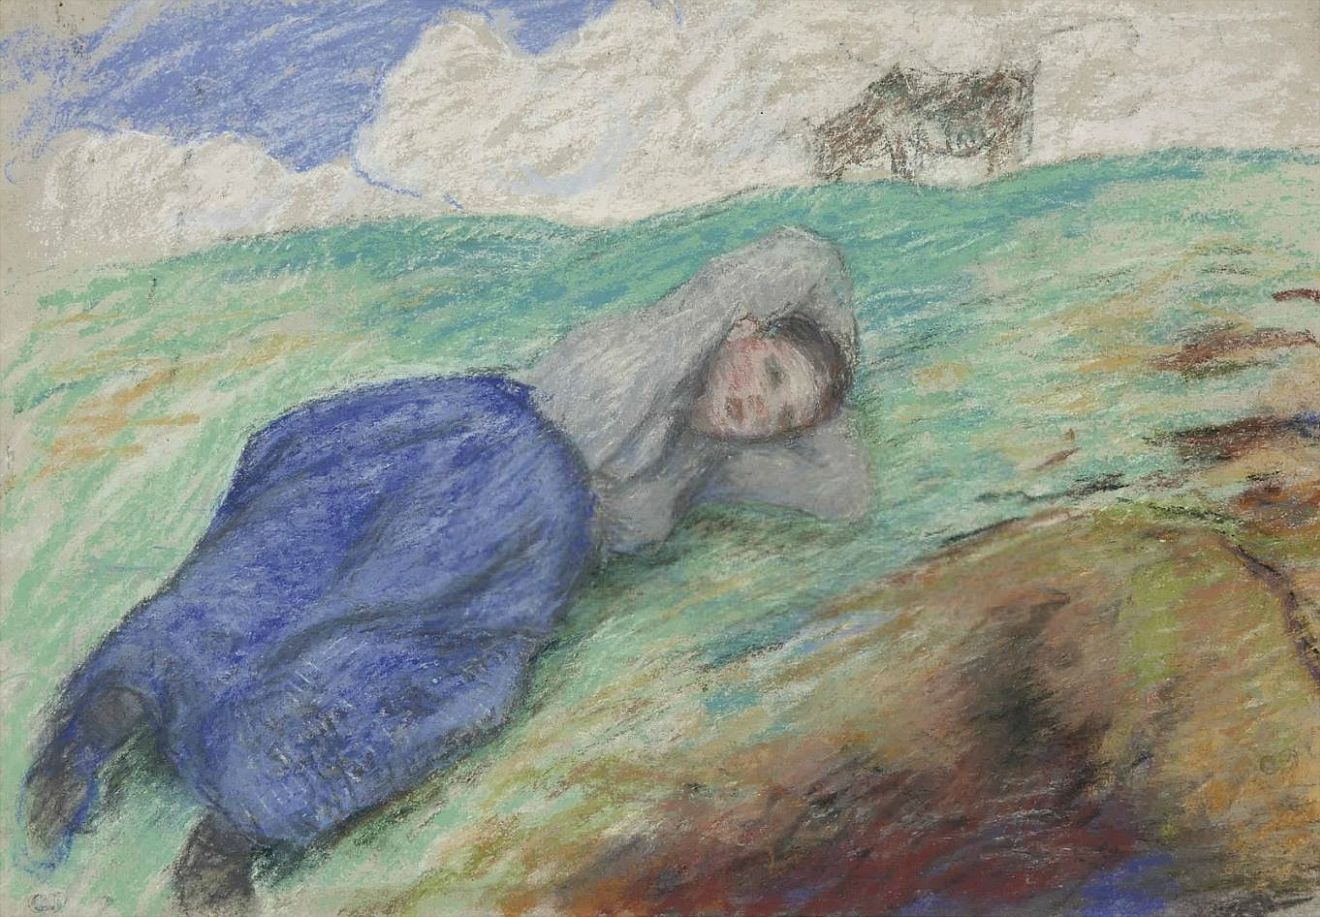 Camille+Pissarro-1830-1903 (210).jpg